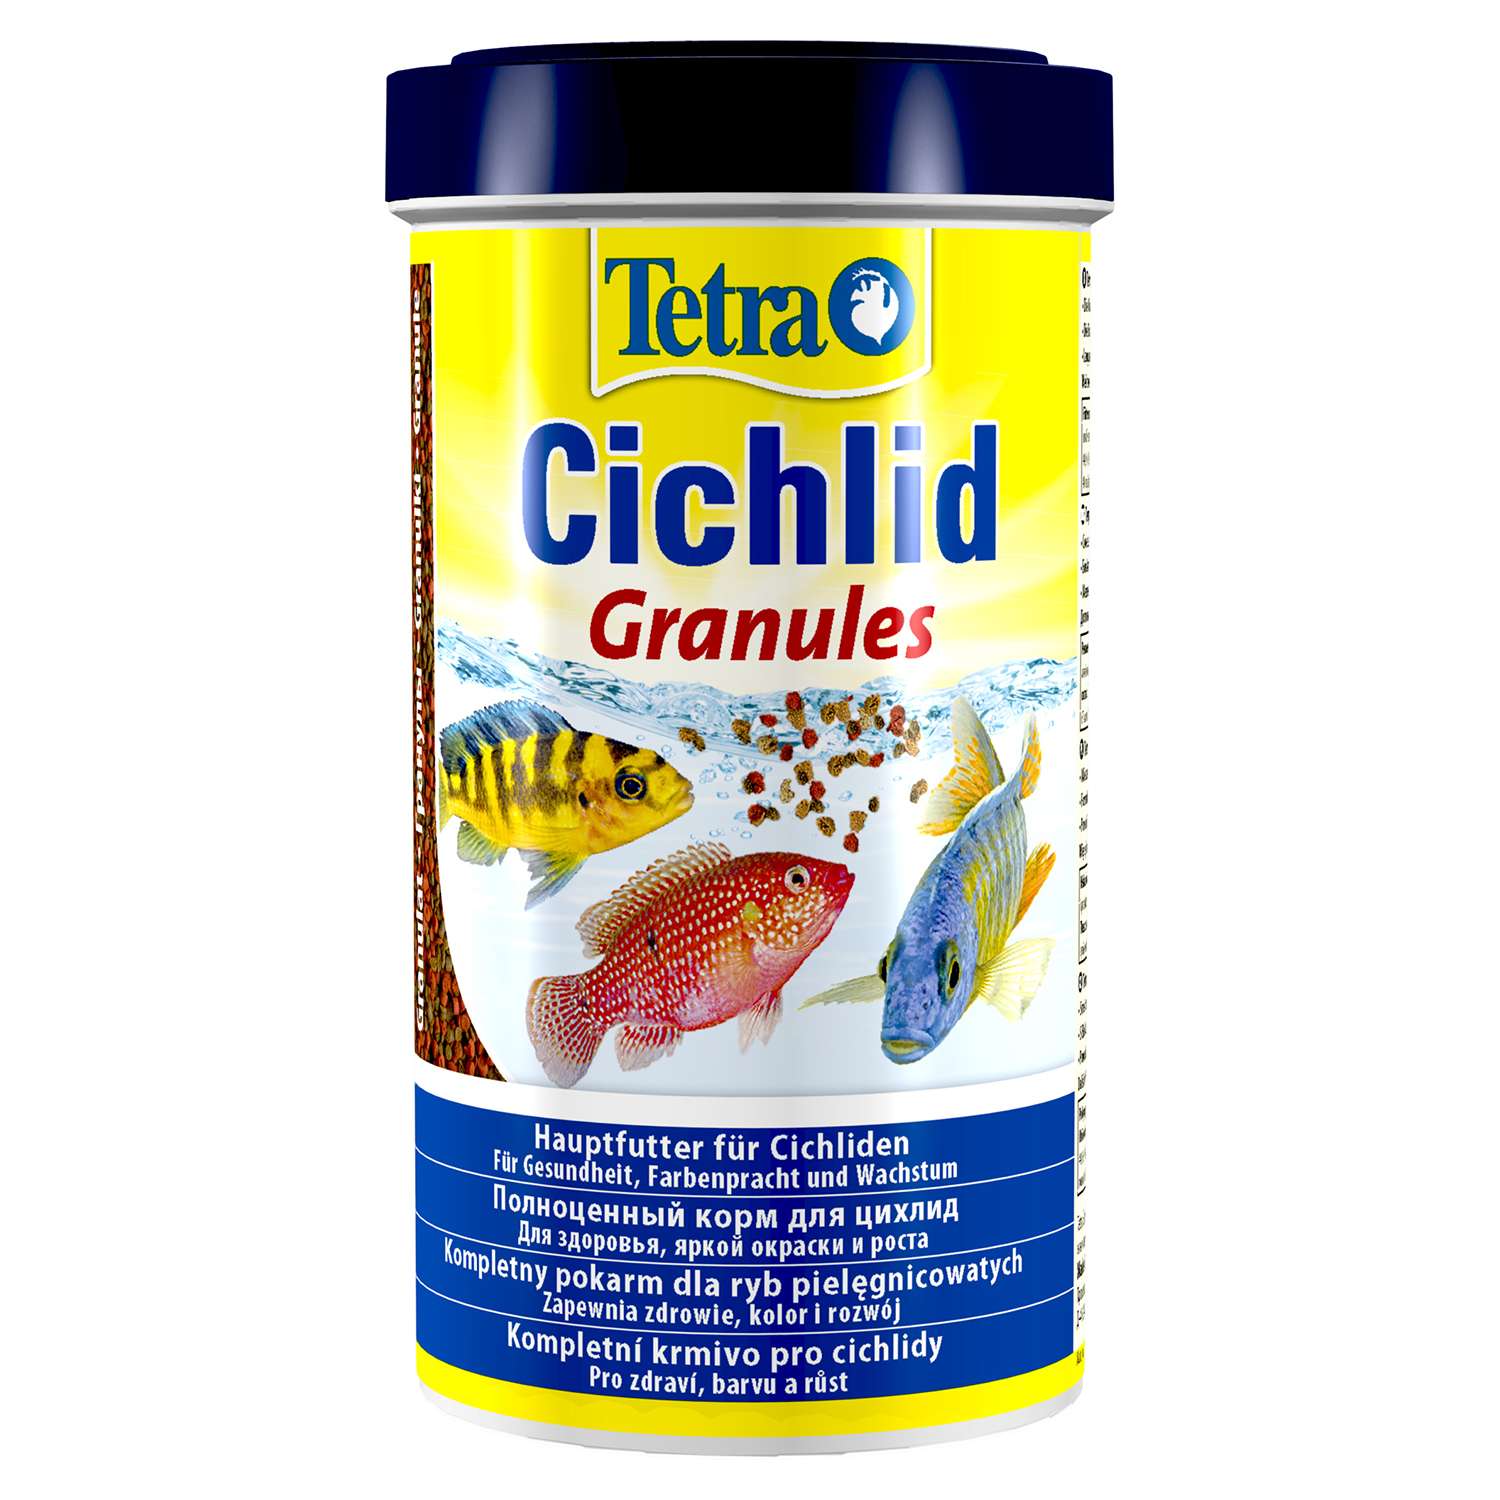 Корм дял рыб Tetra Cichlid Granules всех видов цихлид в гранулах 500мл - фото 2